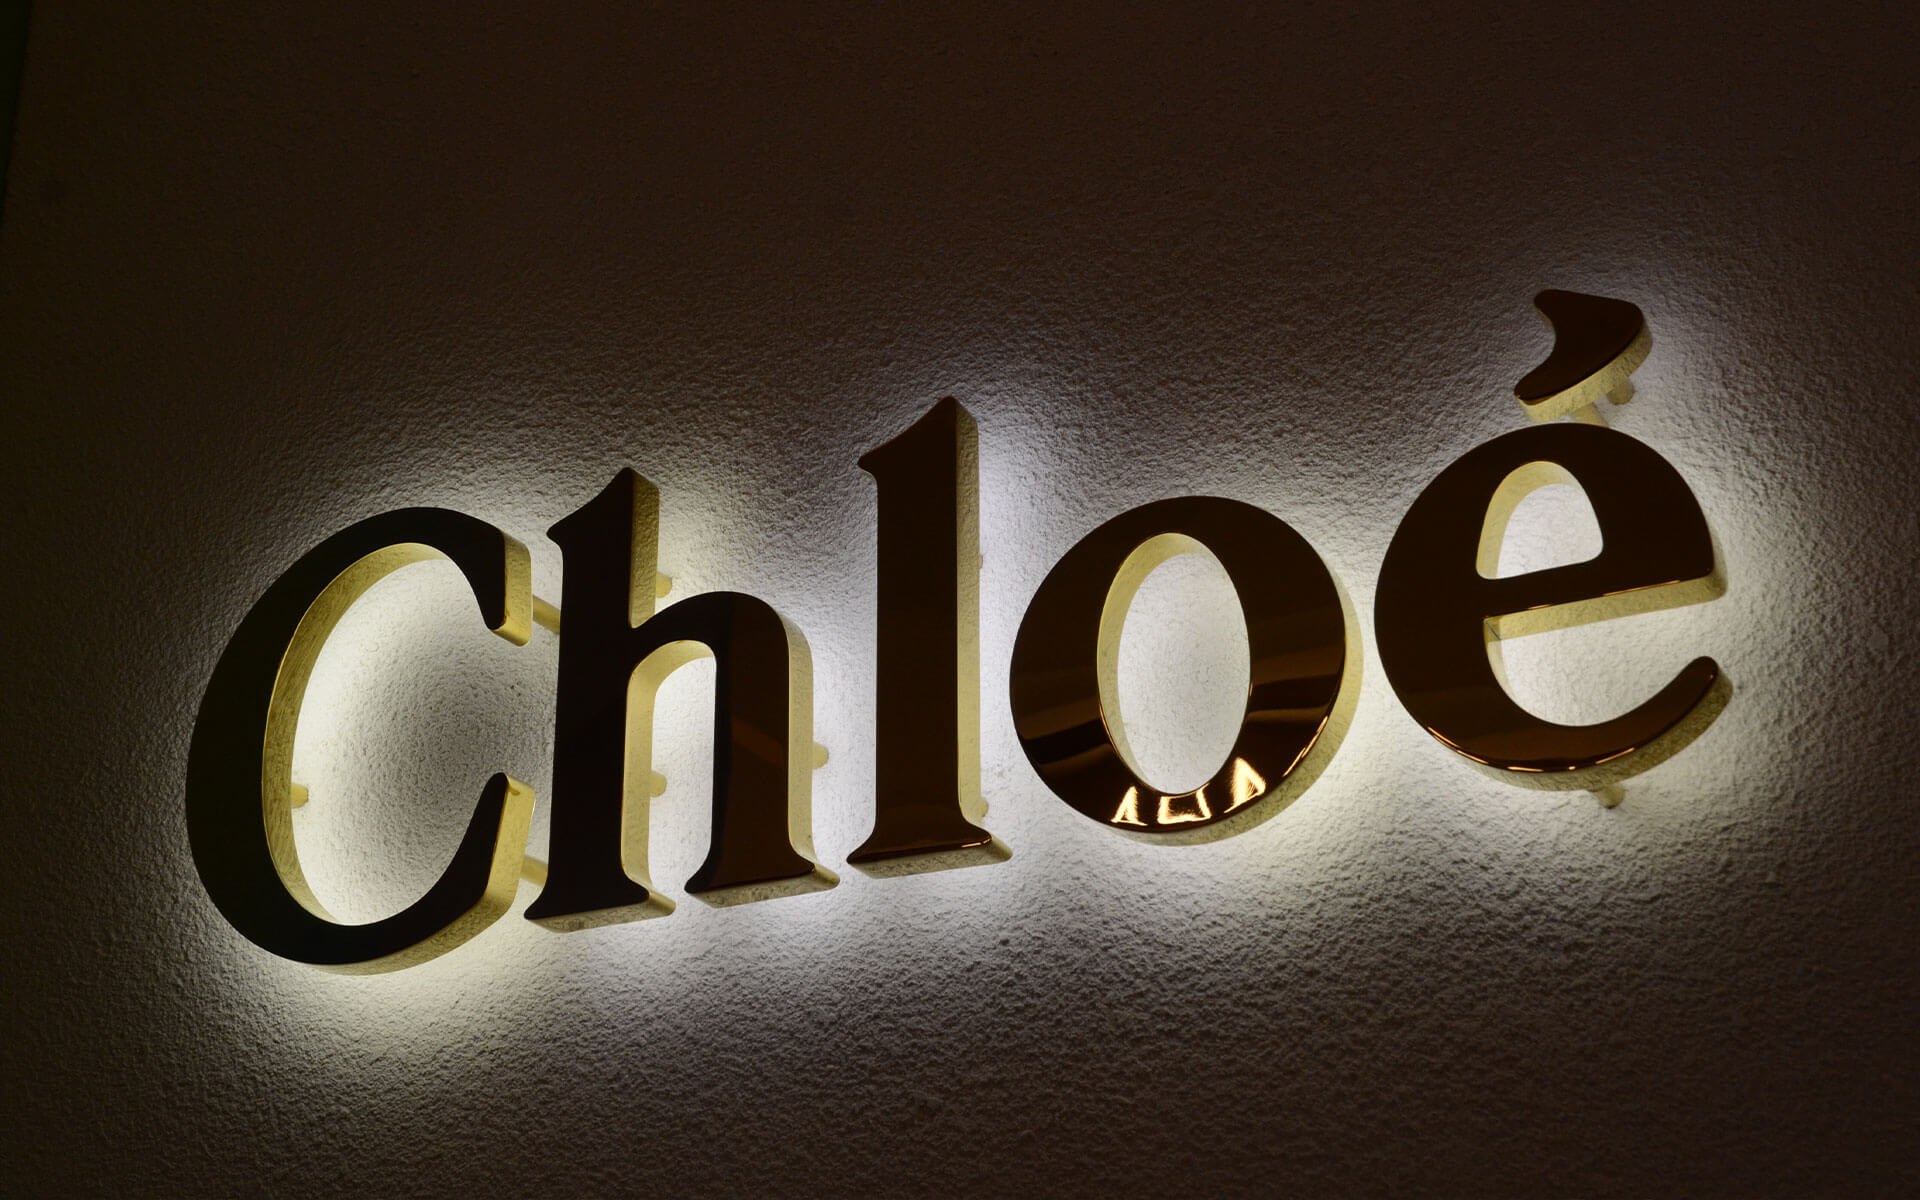 Basic Back-lit Metal Channel Letters for Chloe